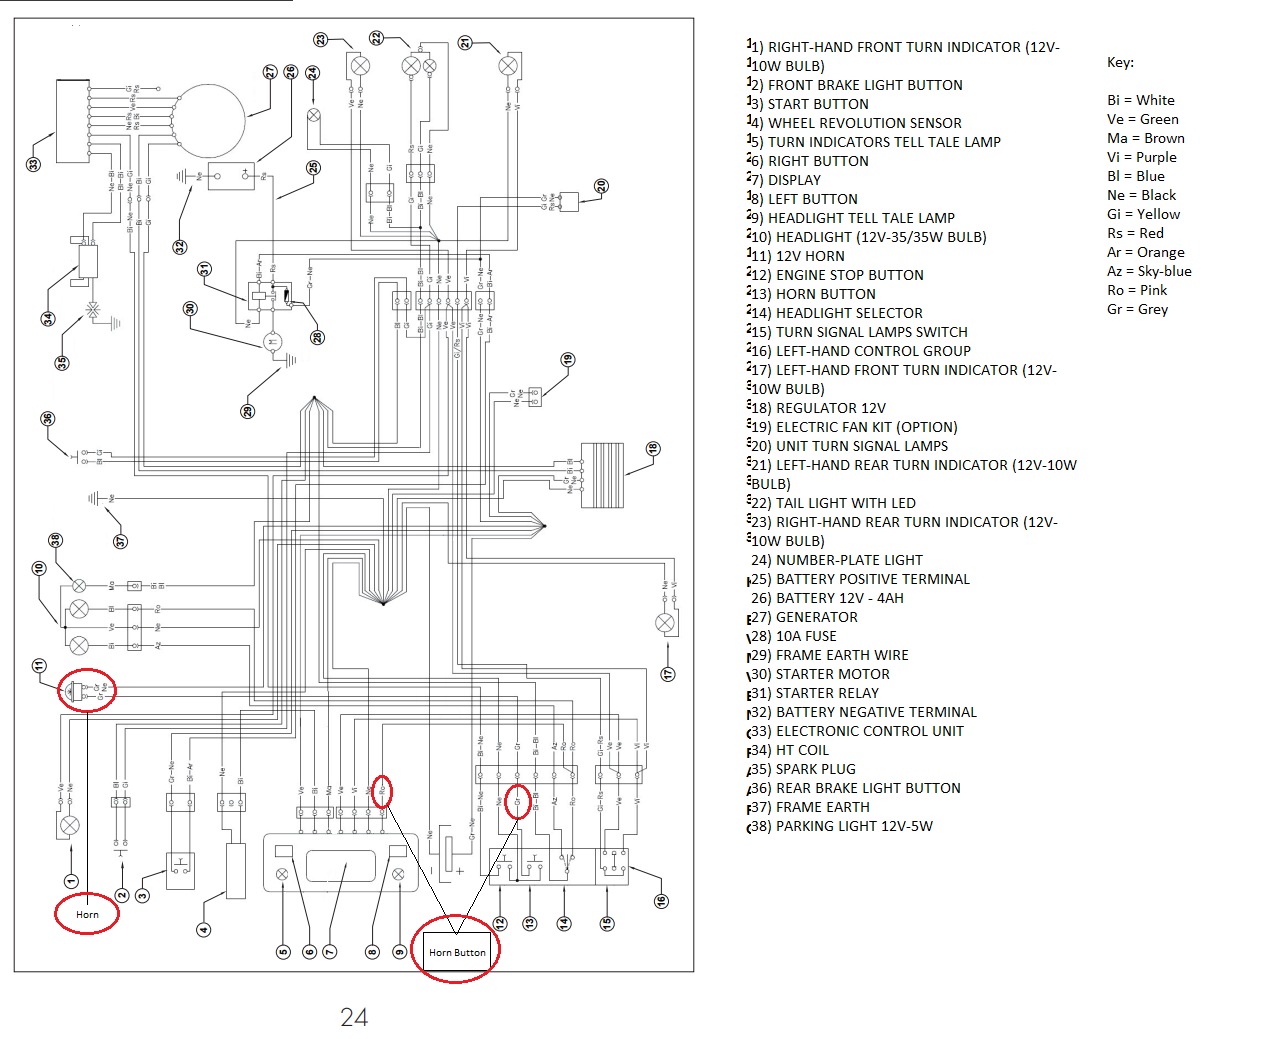 Beta 250 wiring diagram - Copy.png